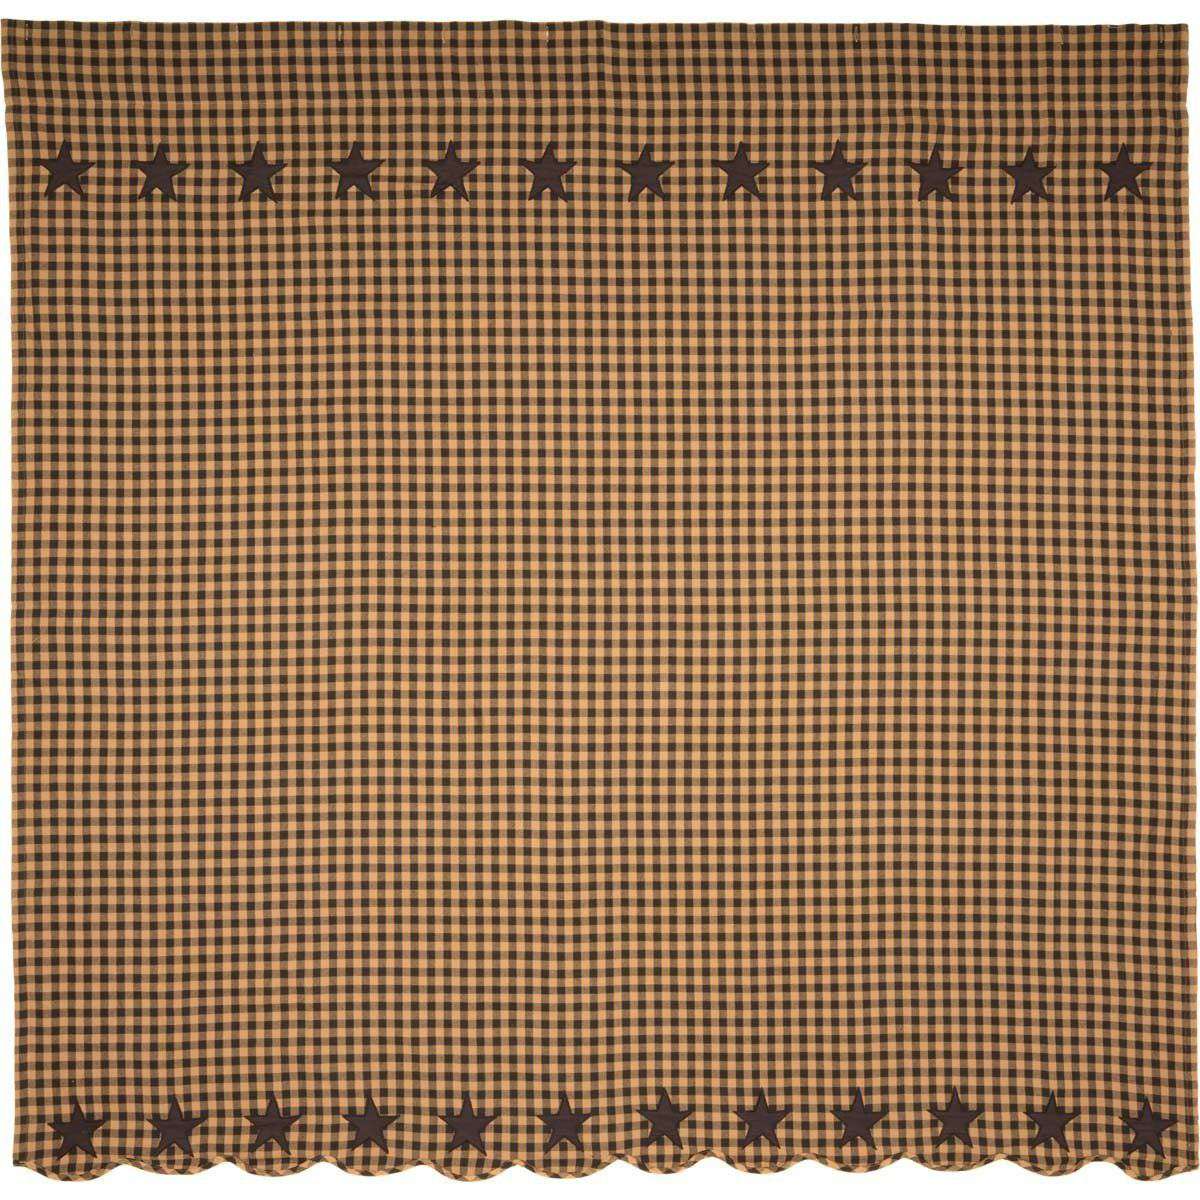 Black Star Shower Curtain 72"x72" curtain VHC Brands 